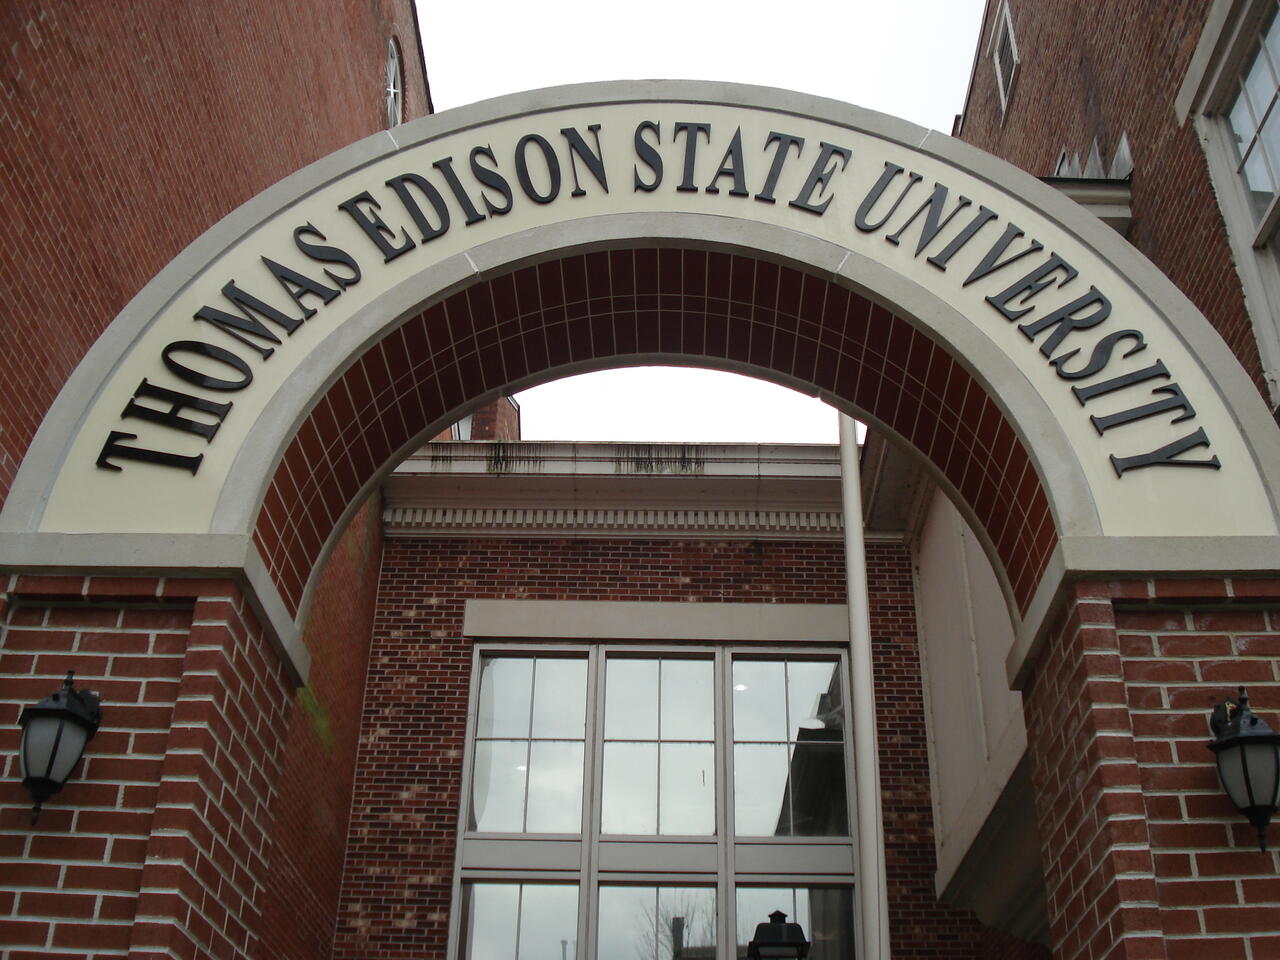 Thomas Edison State University Applauds Governor’s Signing of CreateNJ Bill